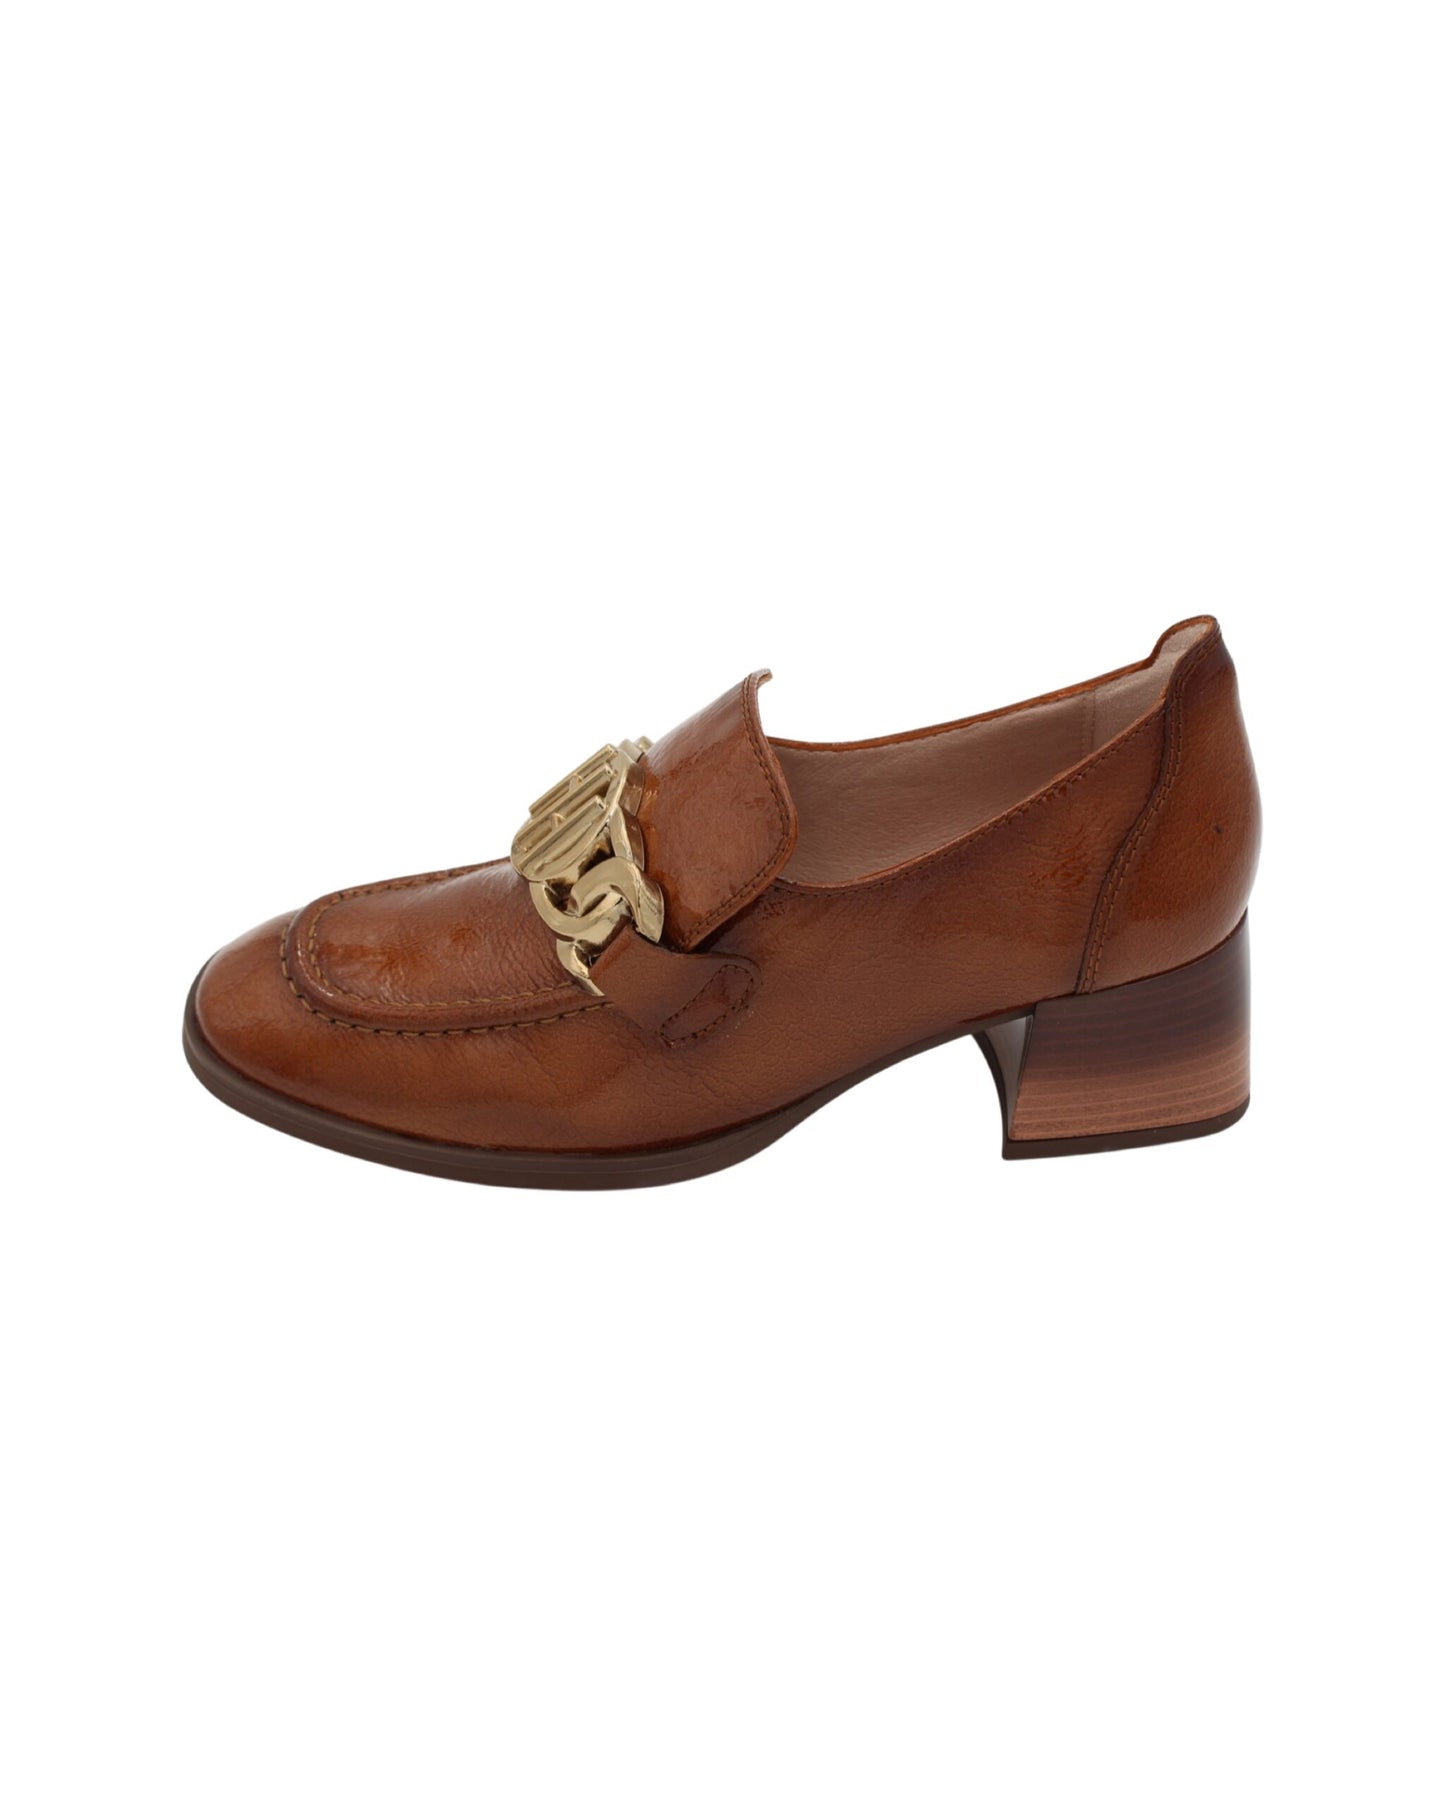 Hispanitas Shoes  Brown